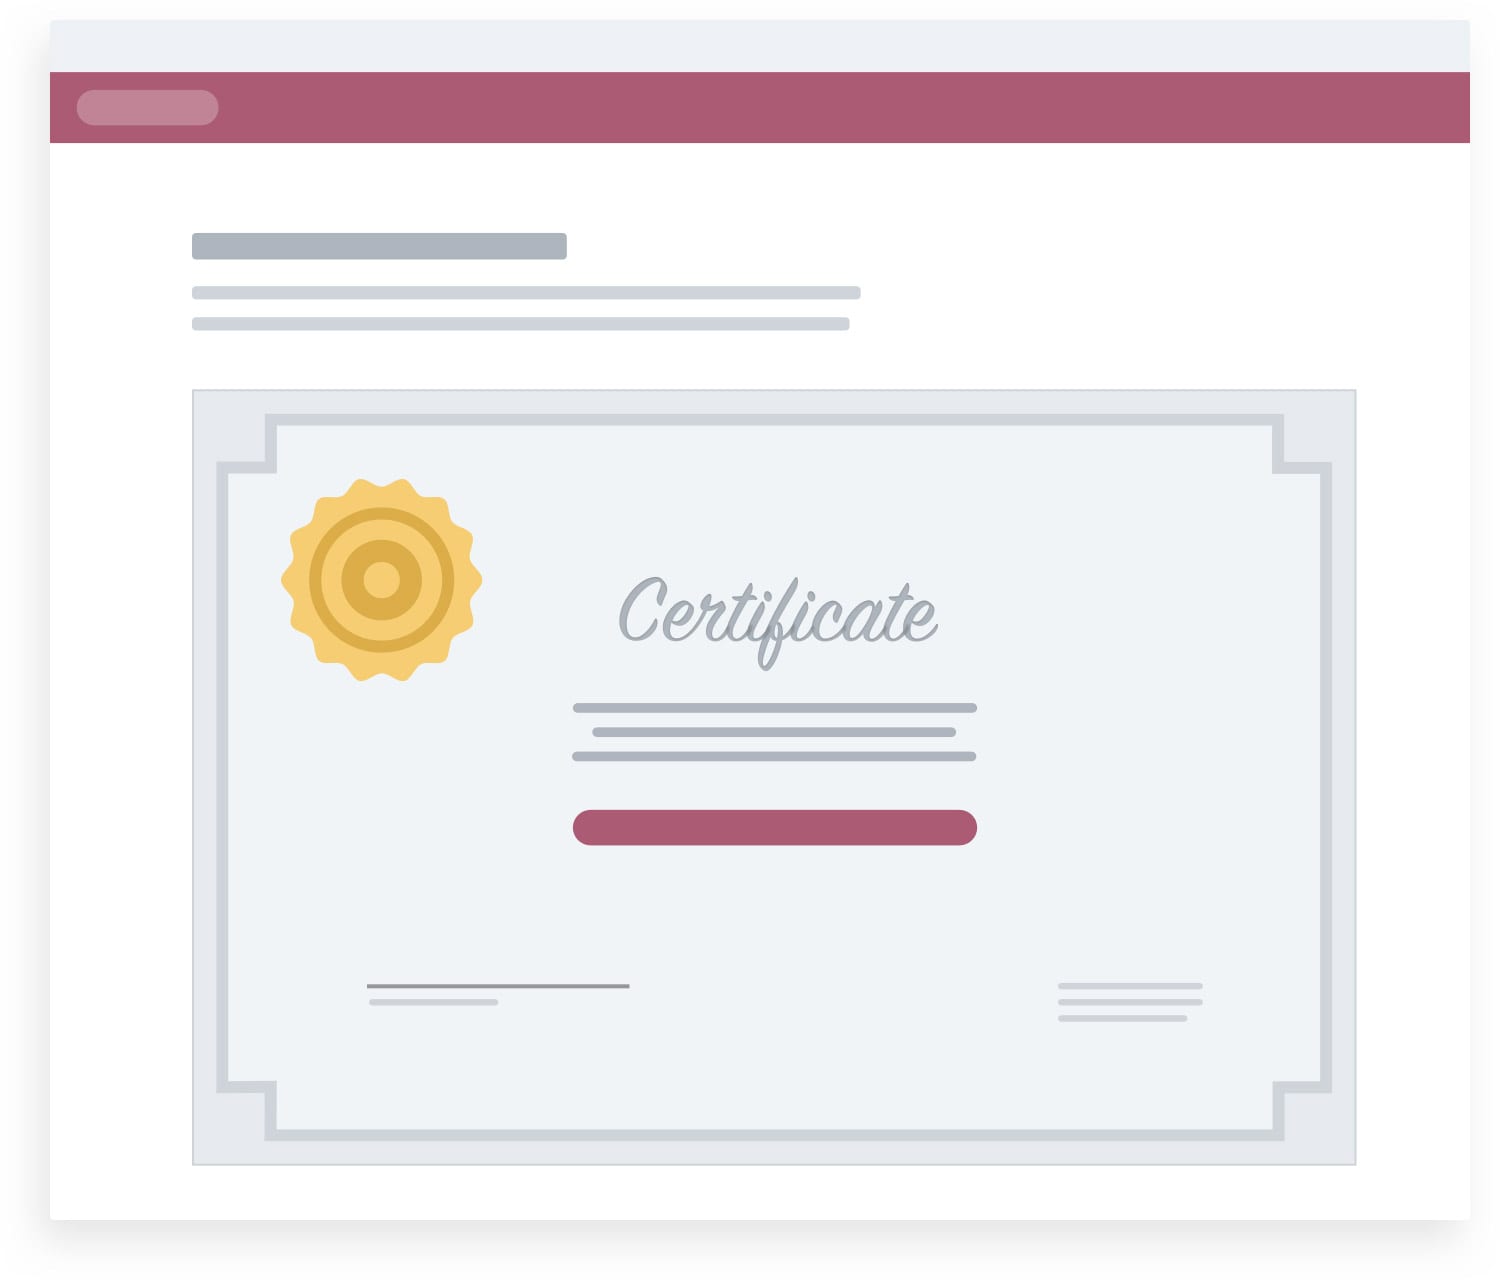 Customer Training Certificates